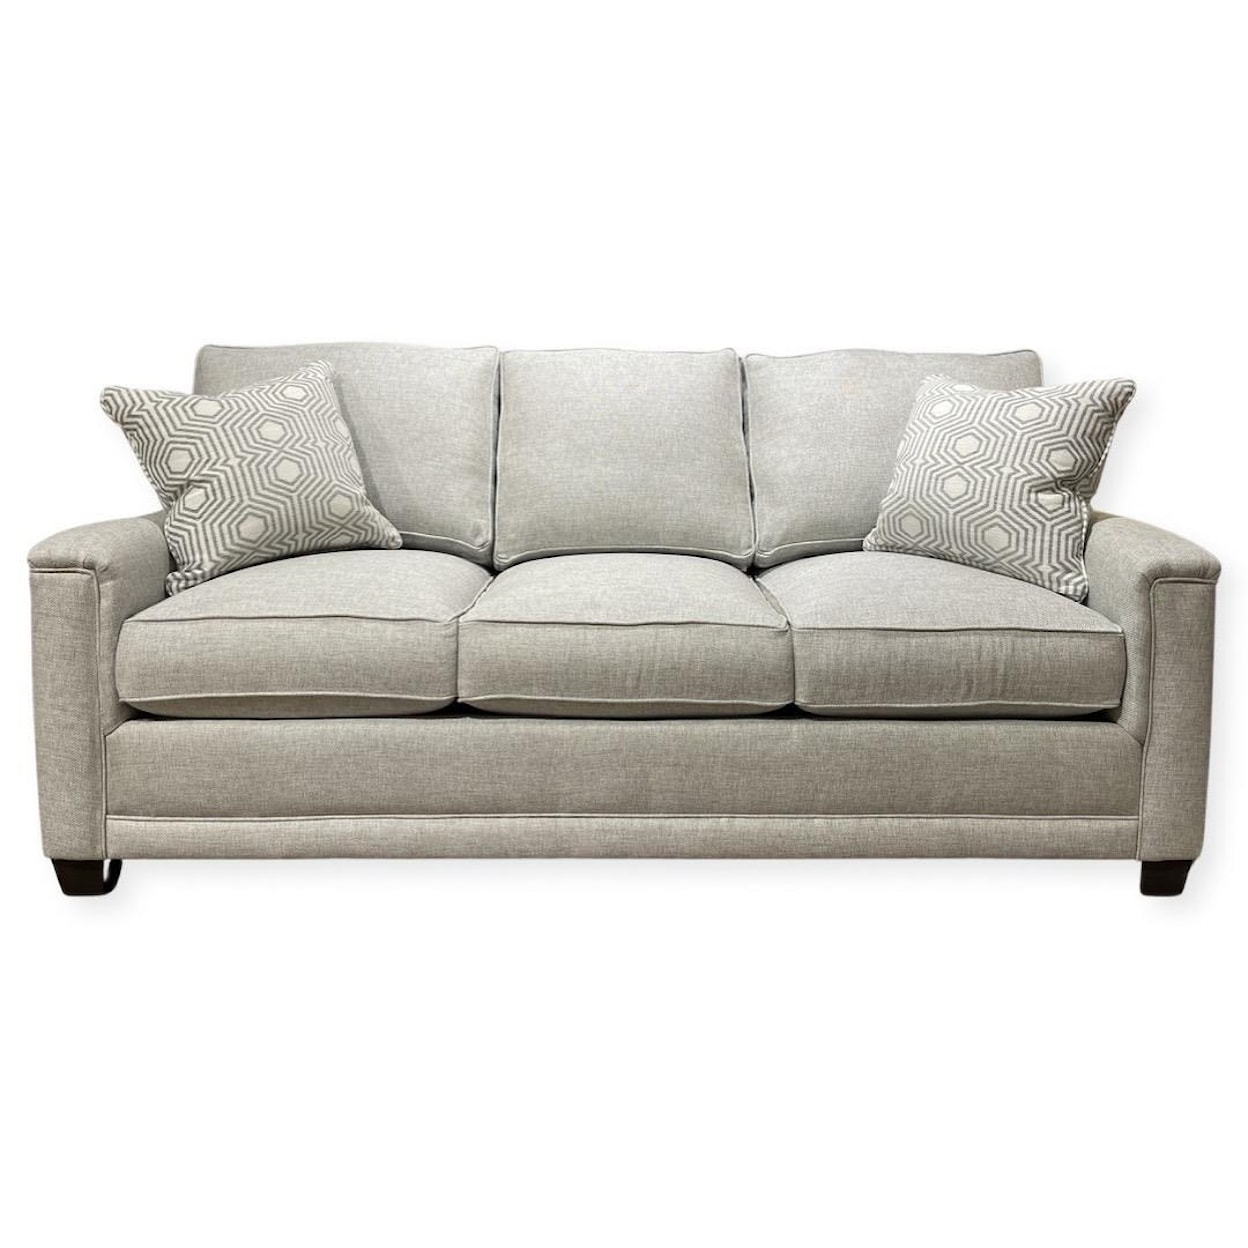 Rowe My Style I Customizable Sofa